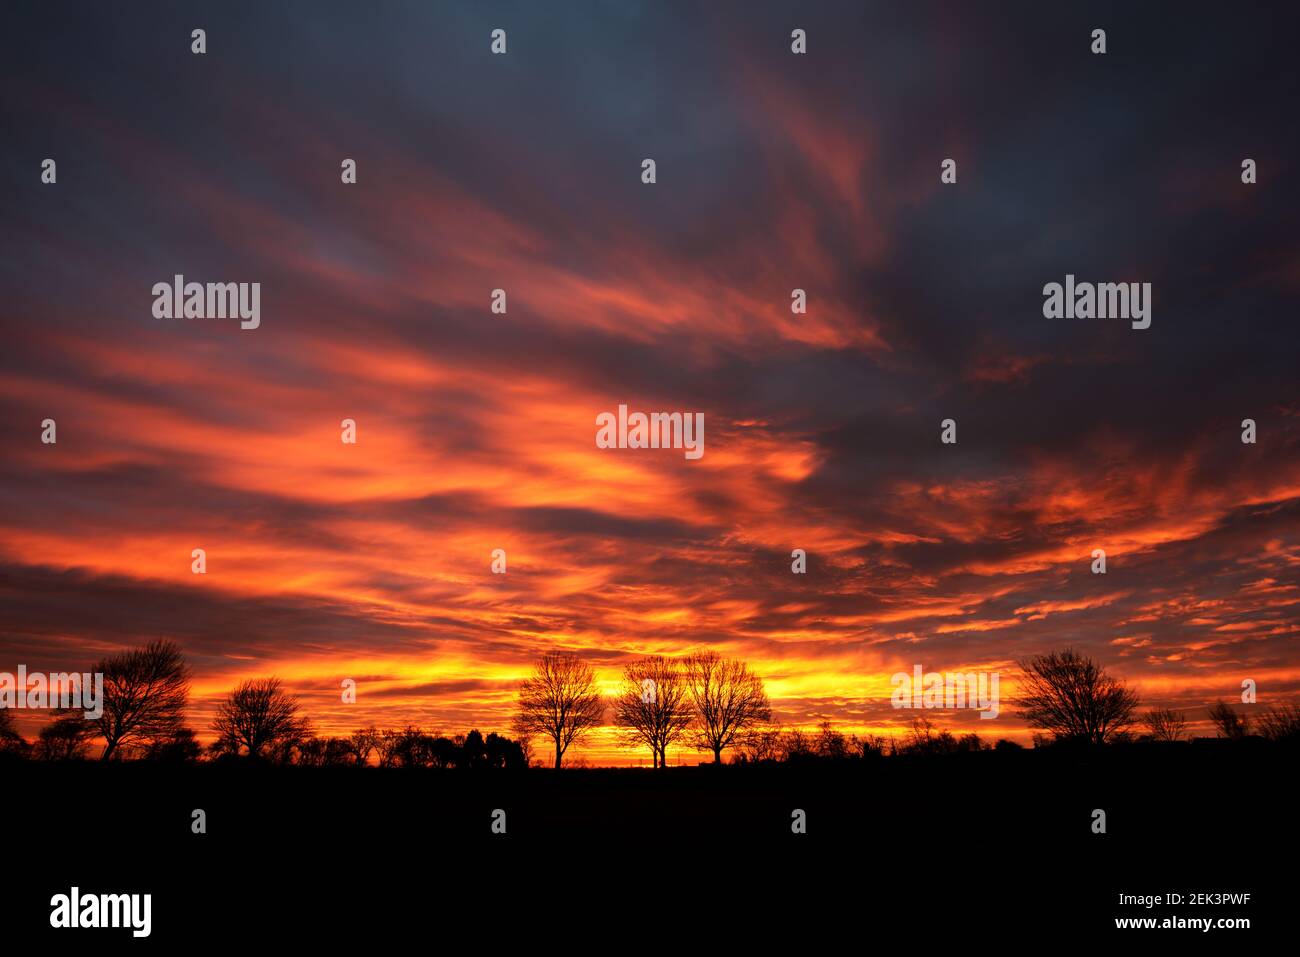 Bingham, Nottinghamshire, UK. 23rd Feb 2021. The sunrise over Bingham, Nottinghamshire. Neil Squires/Alamy Live News Stock Photo